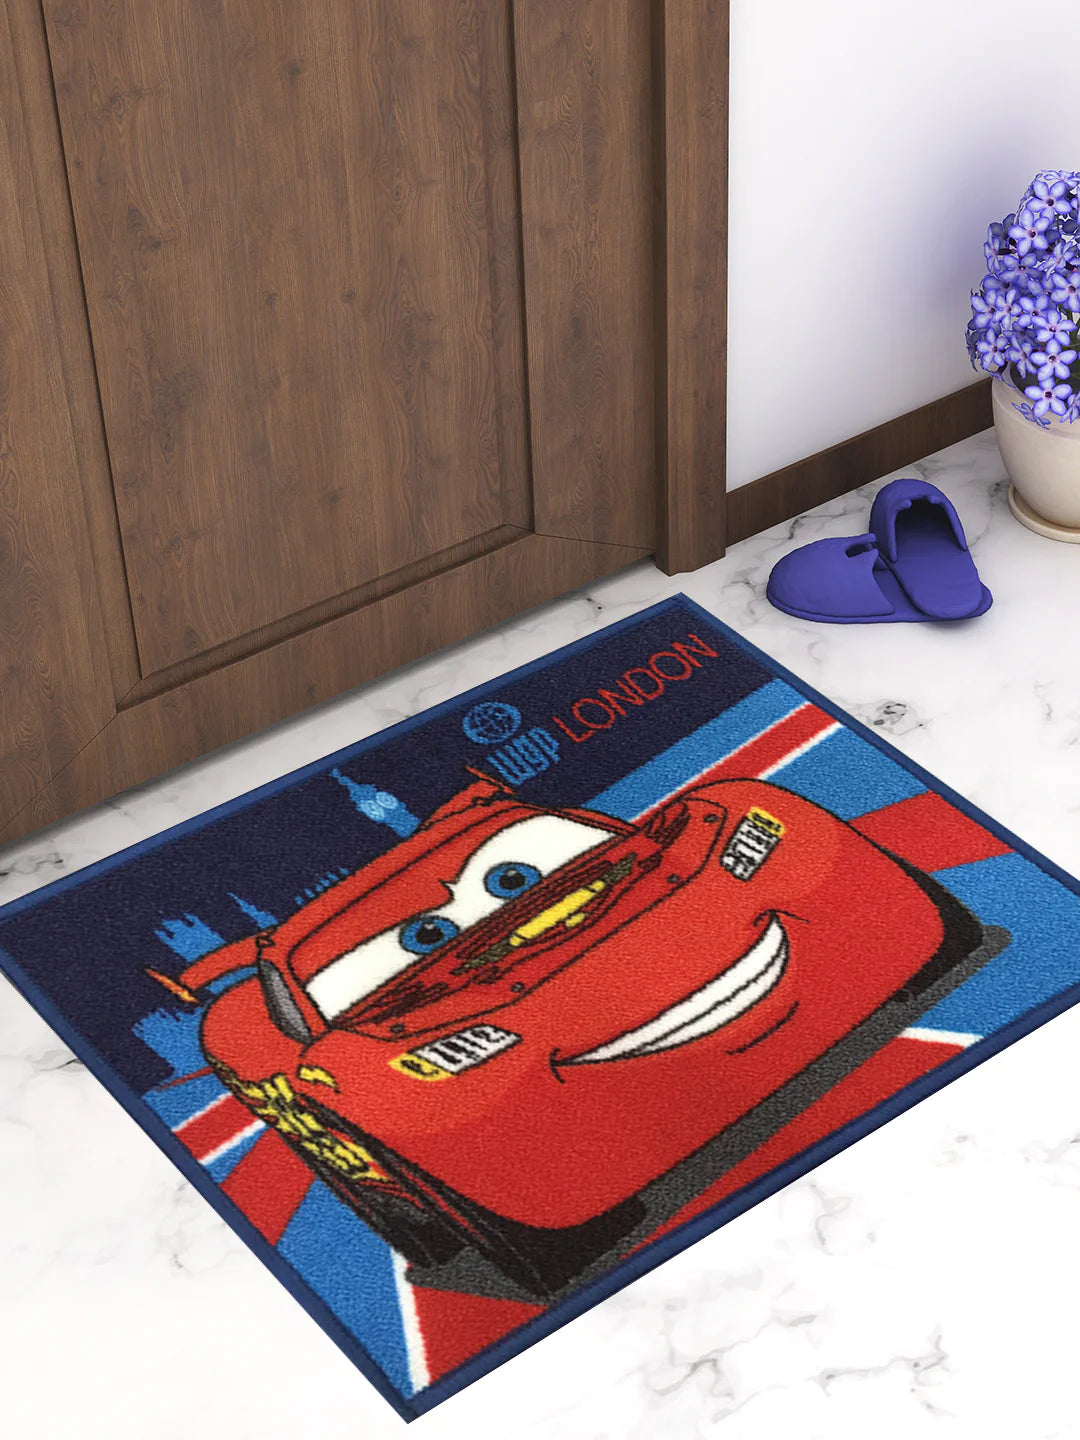 Rev Up the Fun with Disney's Cars Red & Blue Kids Door Mat